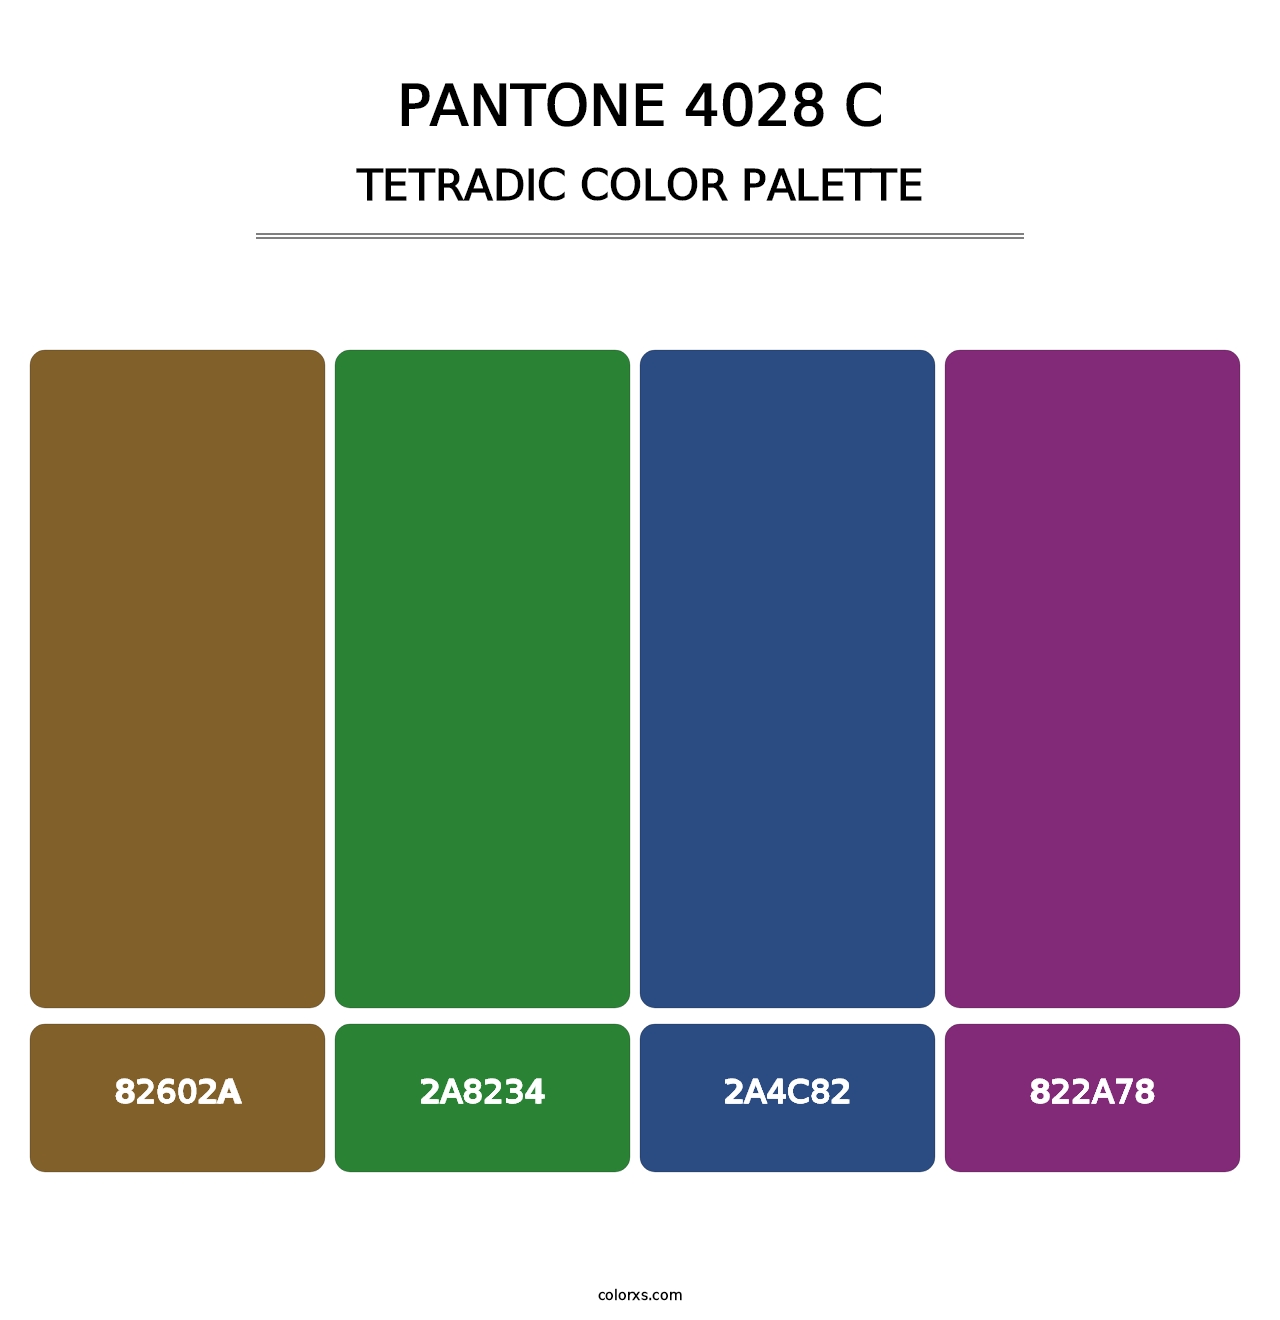 PANTONE 4028 C - Tetradic Color Palette